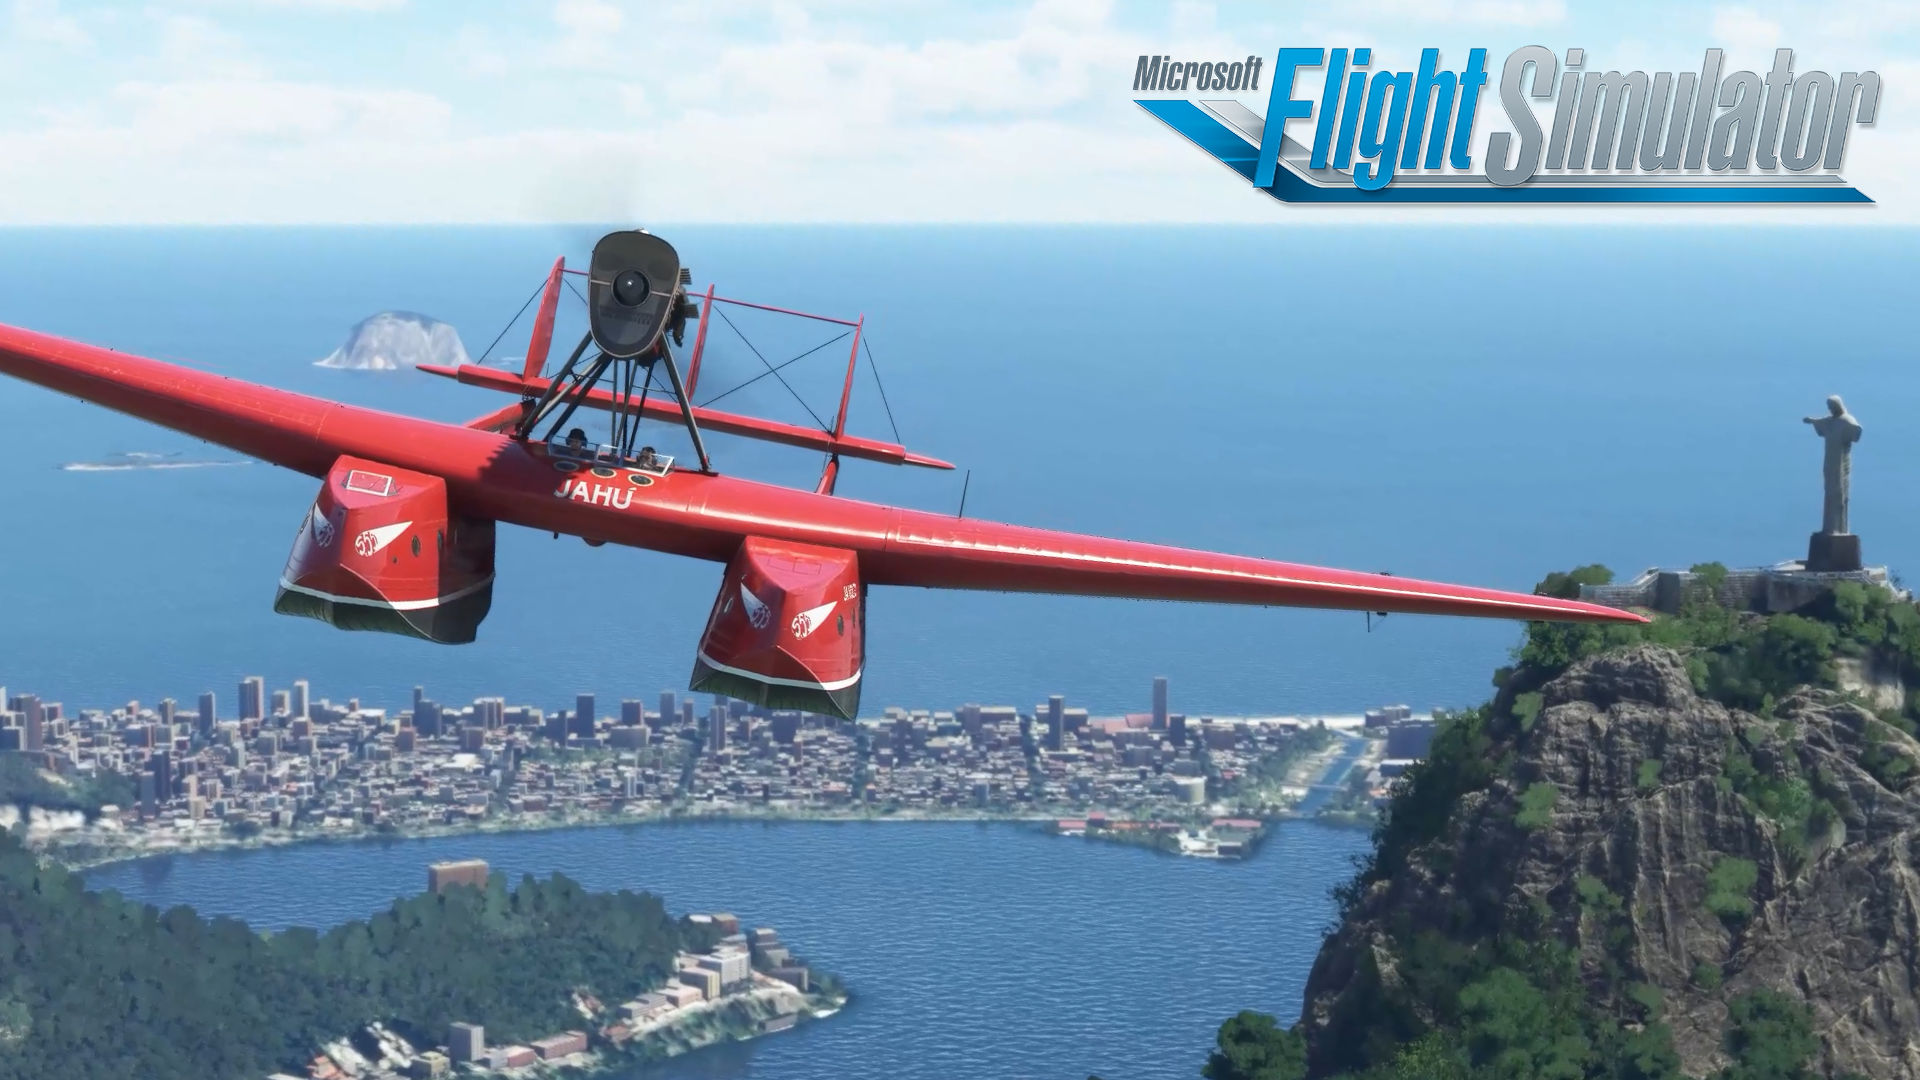 Video For Microsoft Flight Simulator lança nova aeronave em “Local Legends” 4 com S.55 Savoia-Marchetti 